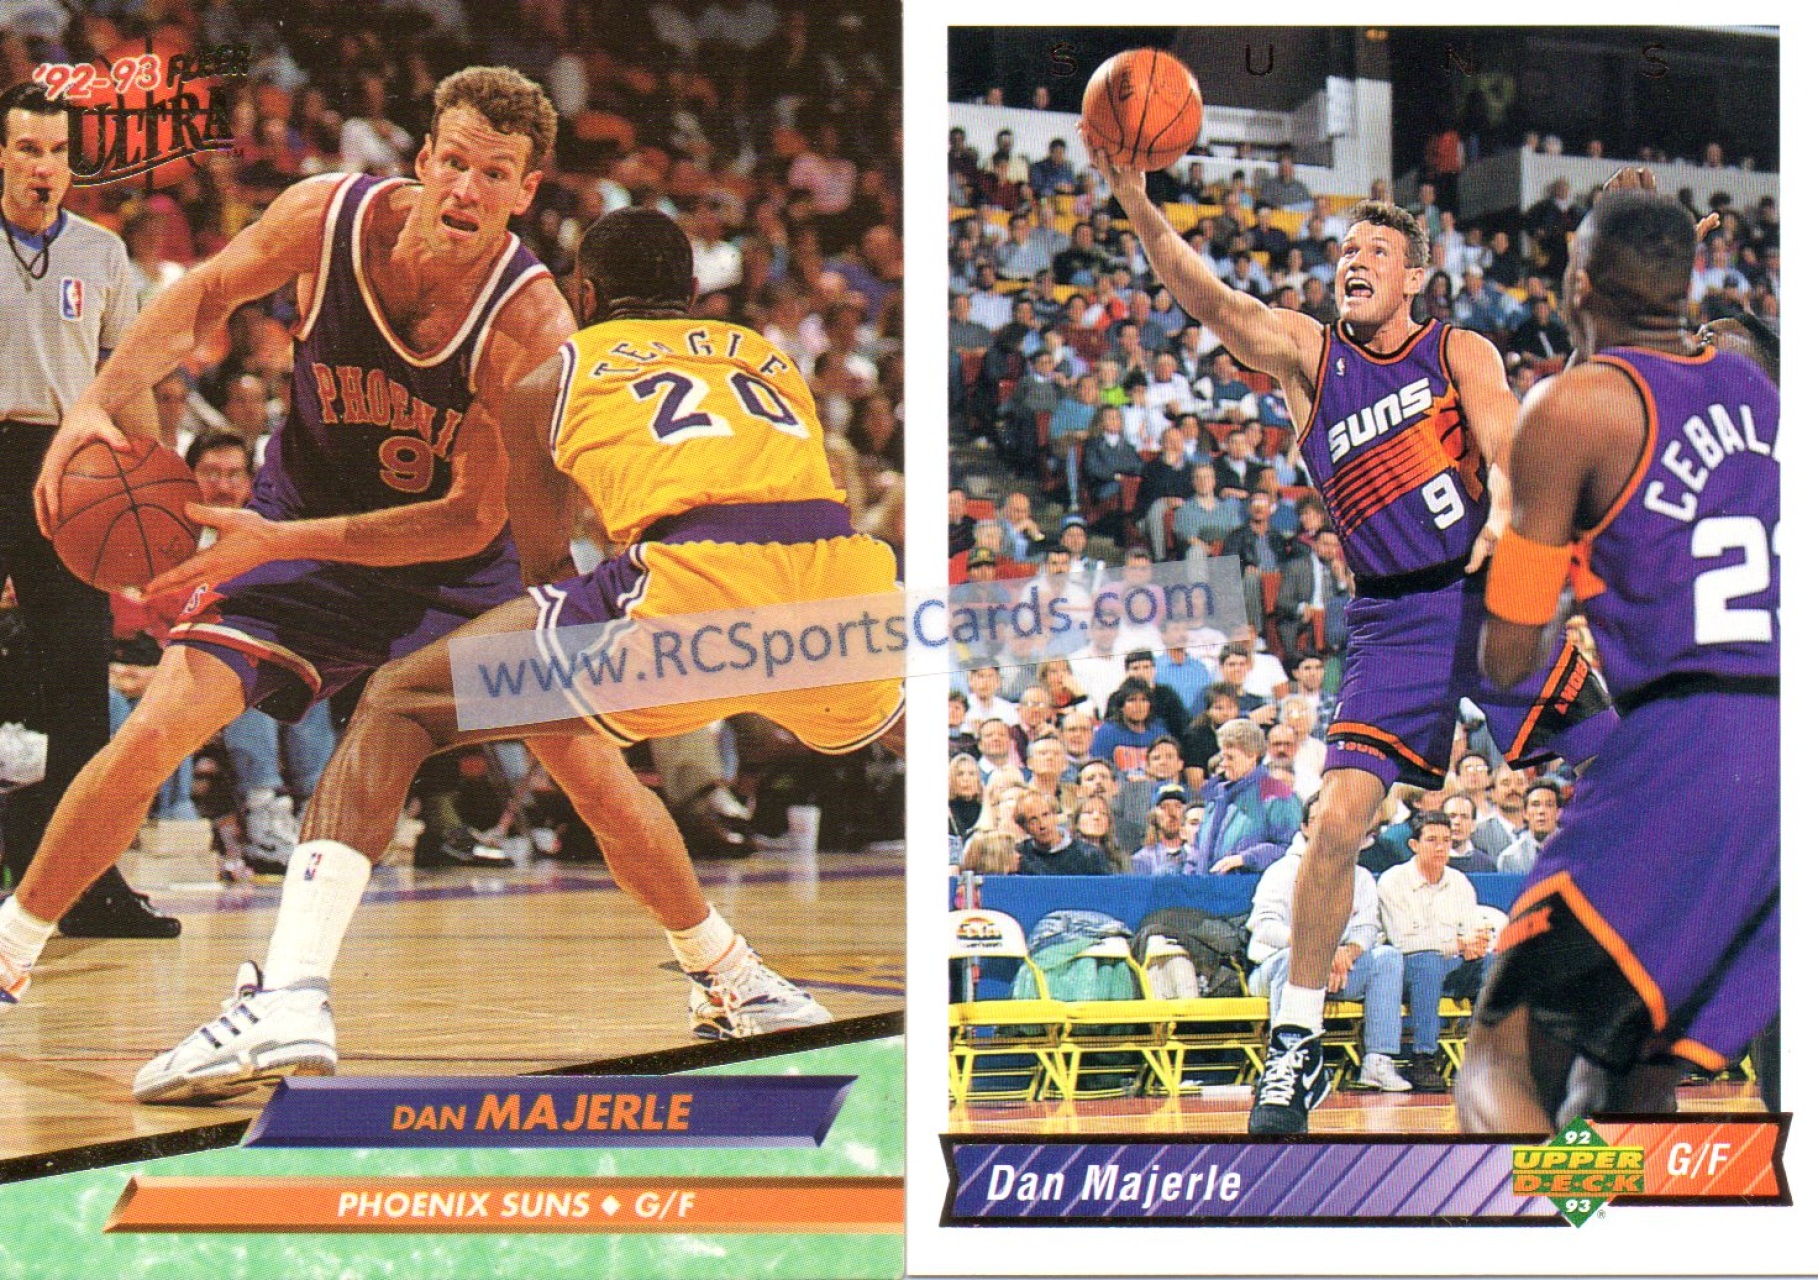 Dan Majerle Signed Phoenix Suns 1994-95 Ultra Basketball Card BAS